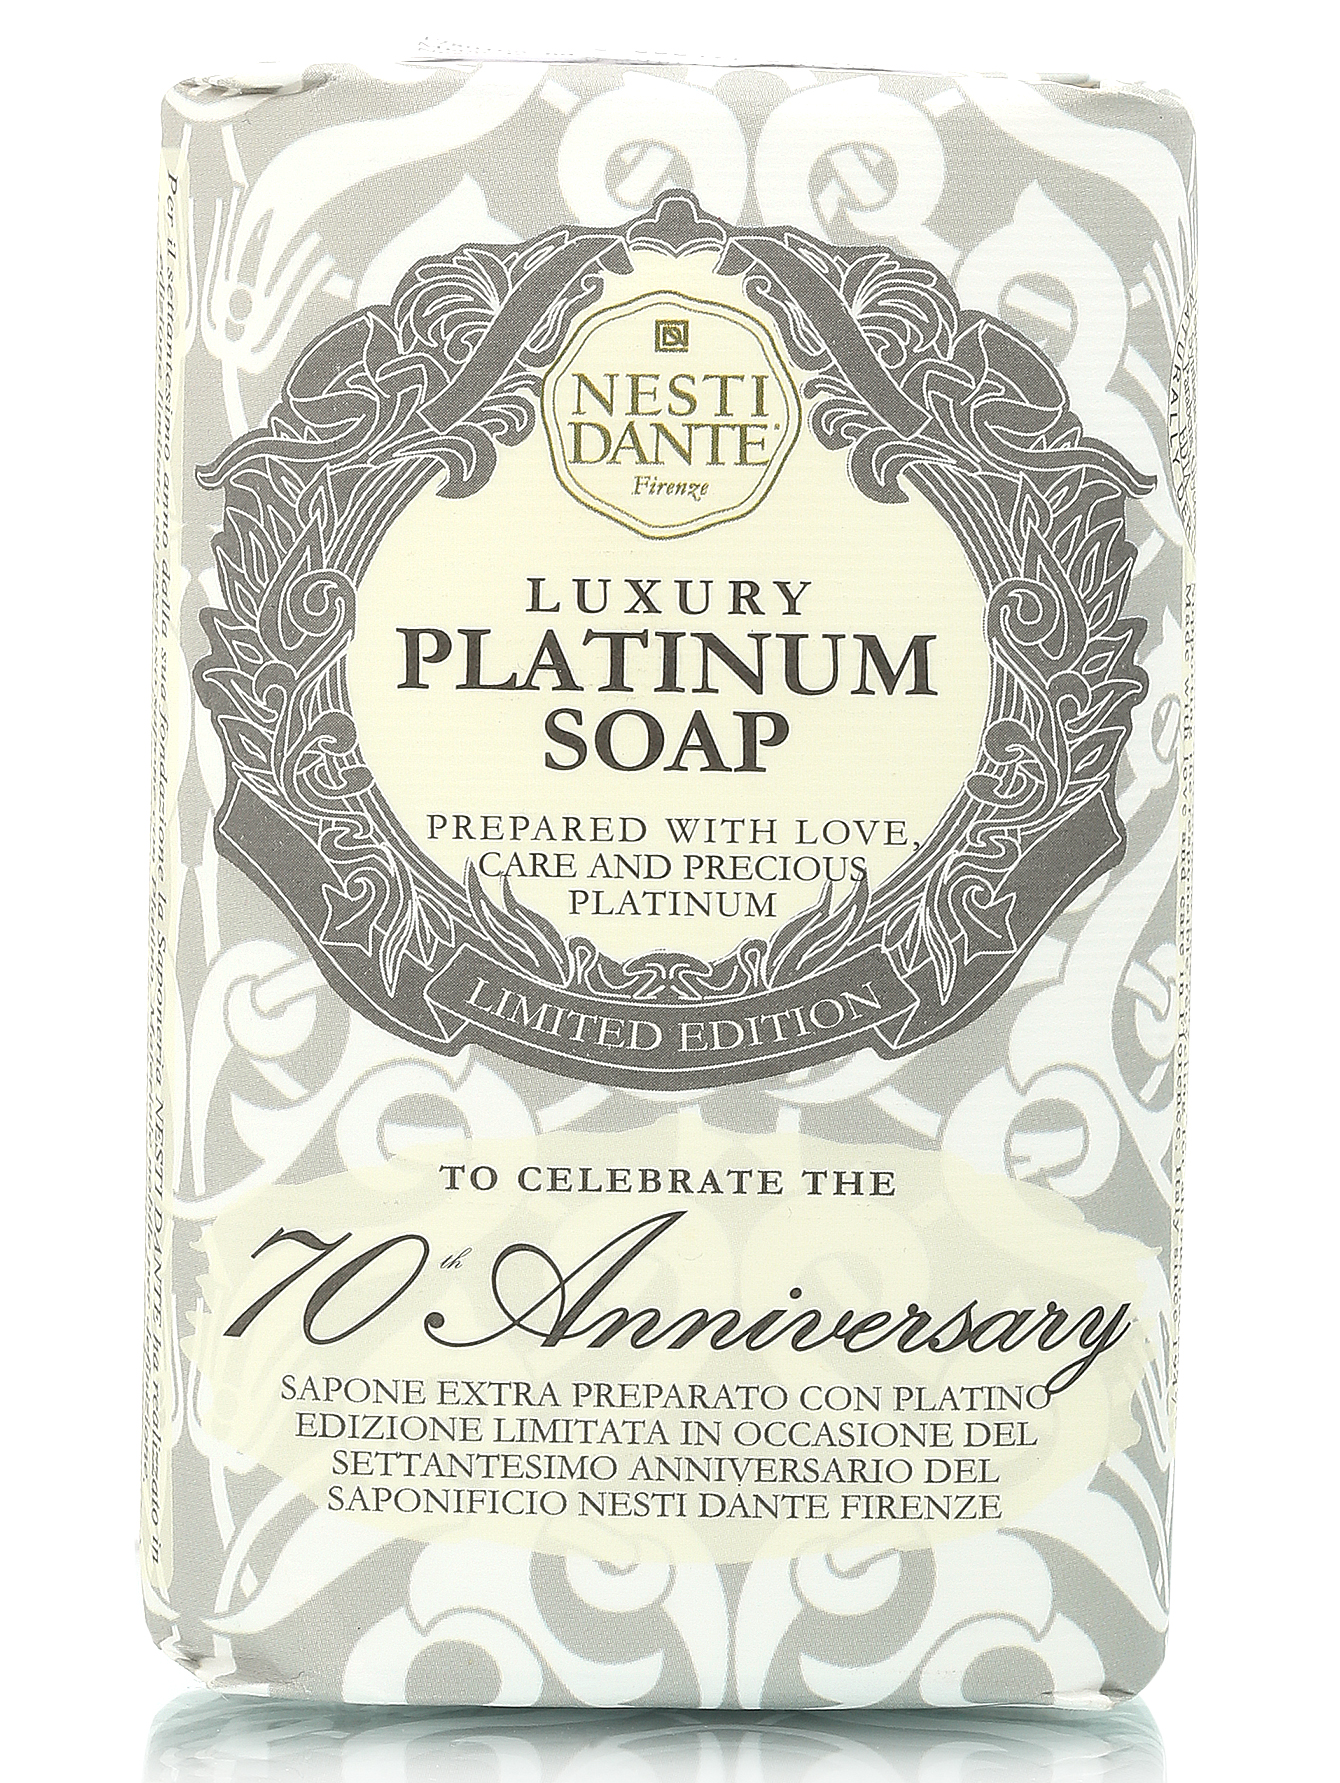 Мыло Platinum Soap 70-th Anniversary, 250 г - Общий вид